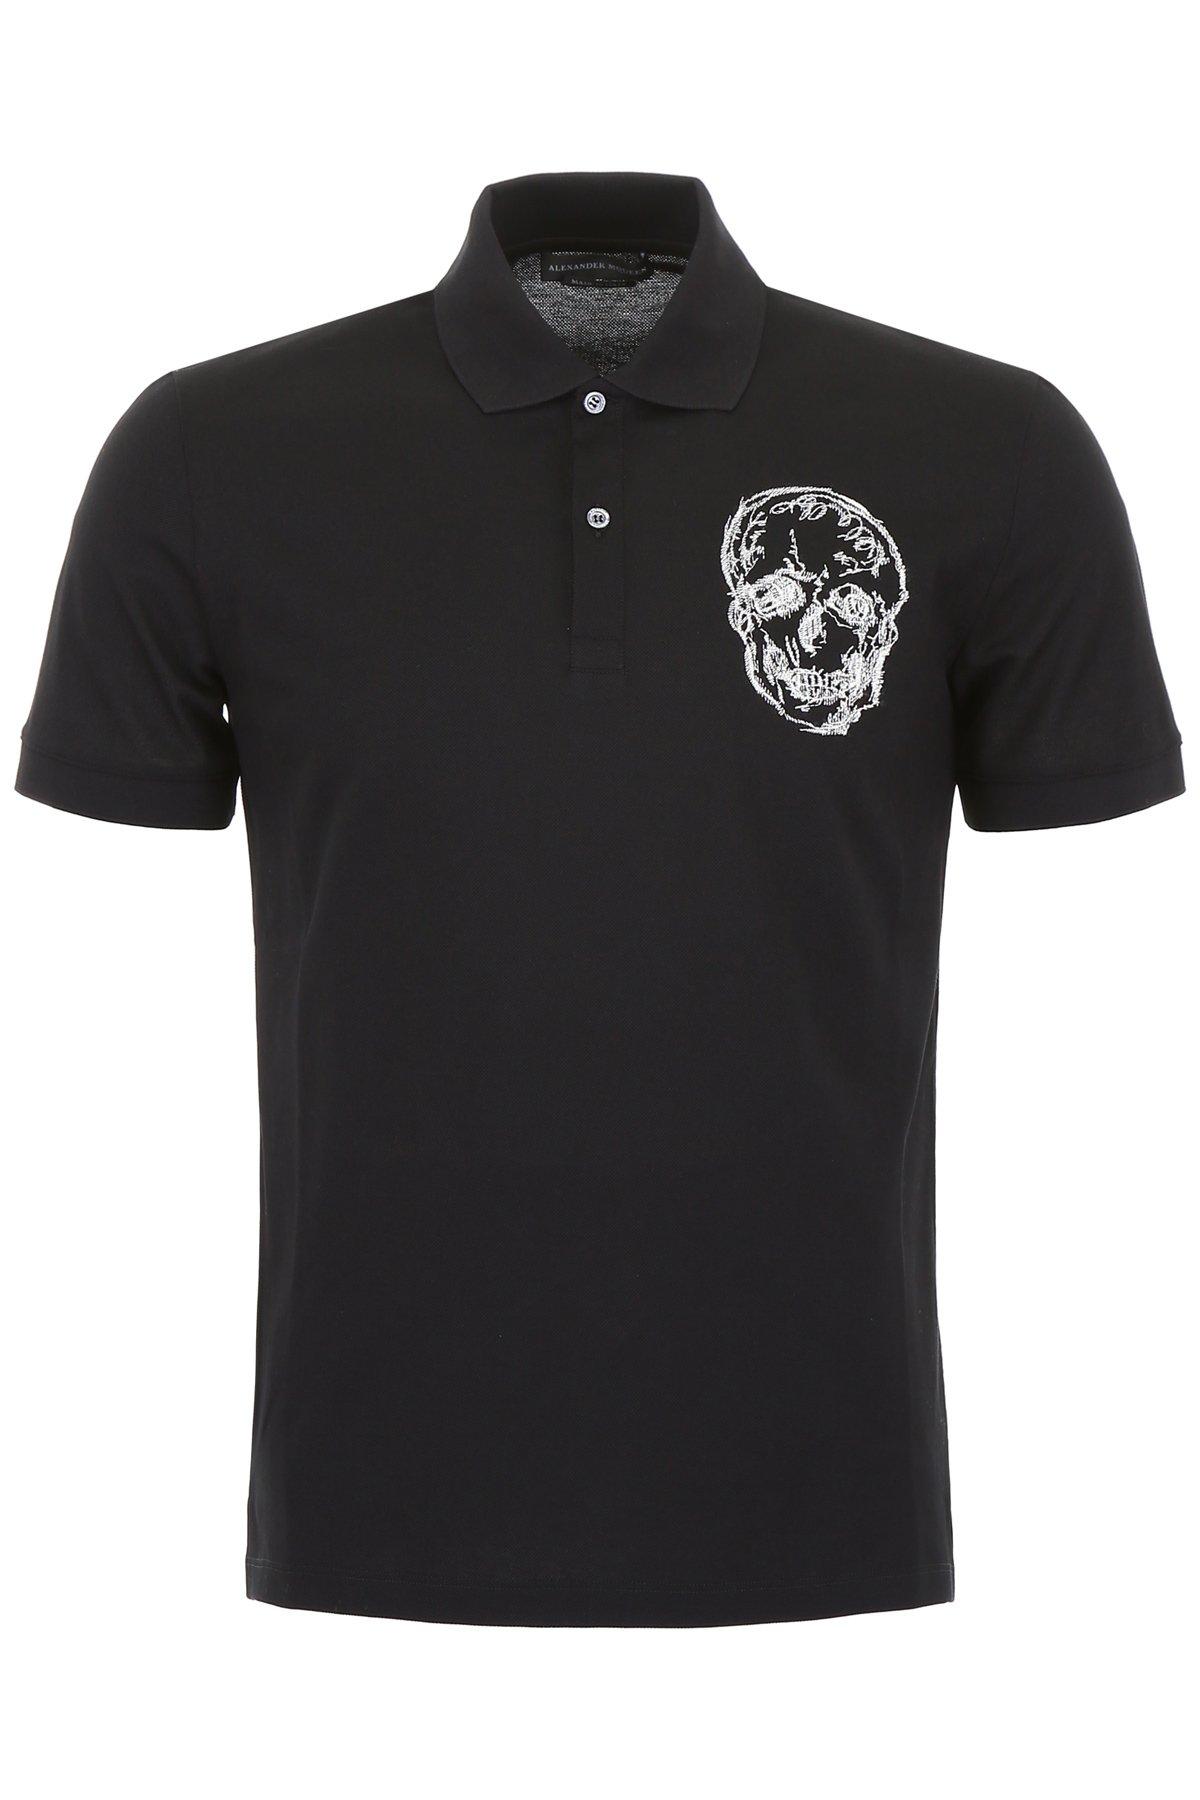 Alexander McQueen Cotton Skull Polo Shirt in Black for Men - Save 40% ...